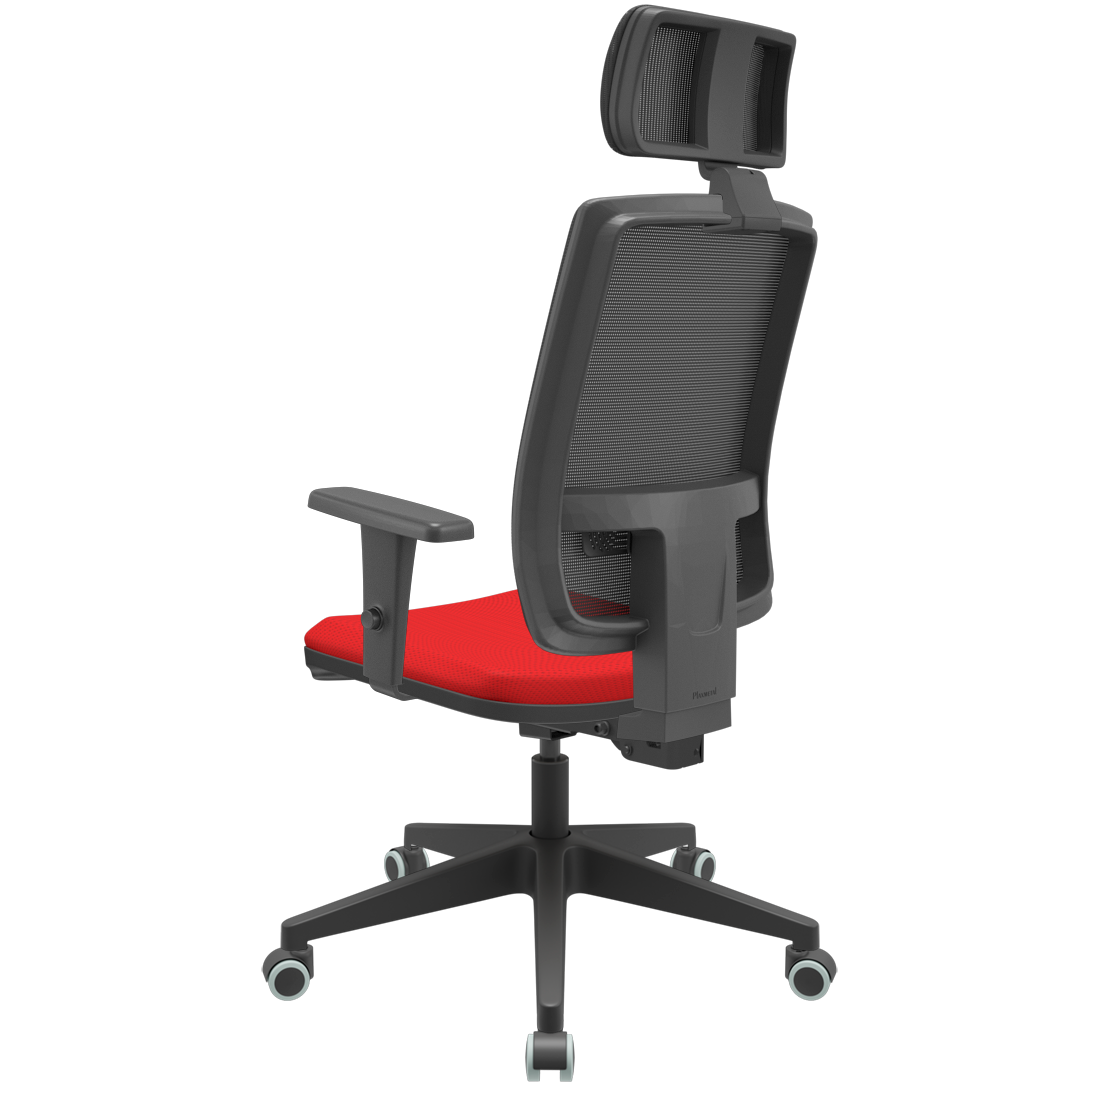 Cadeira Brizza Presidente Back System c/ Apoio Gupe Decor Cadeira Presidente telada c/ apoio Preto - 6